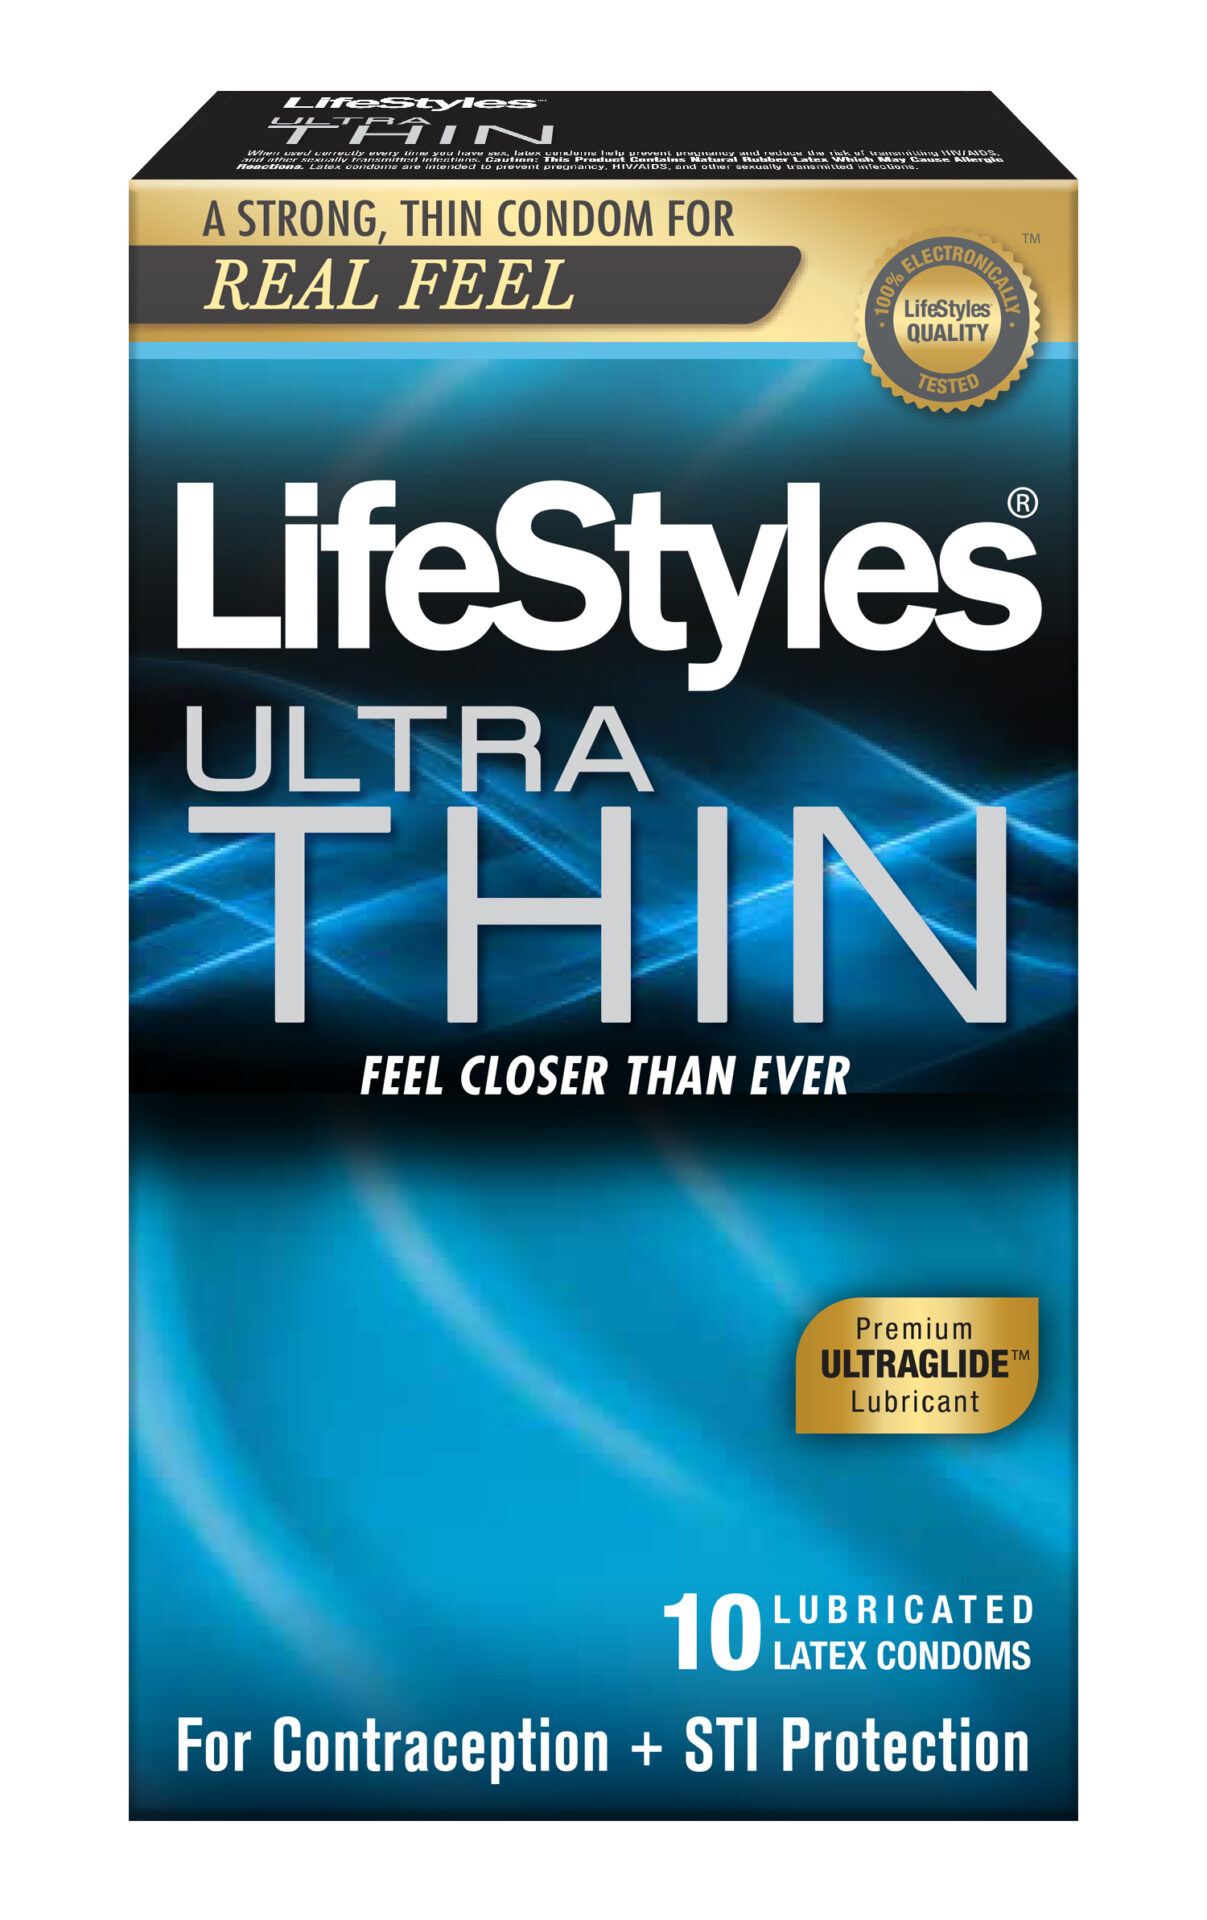 Lifestyle Ultra Thin